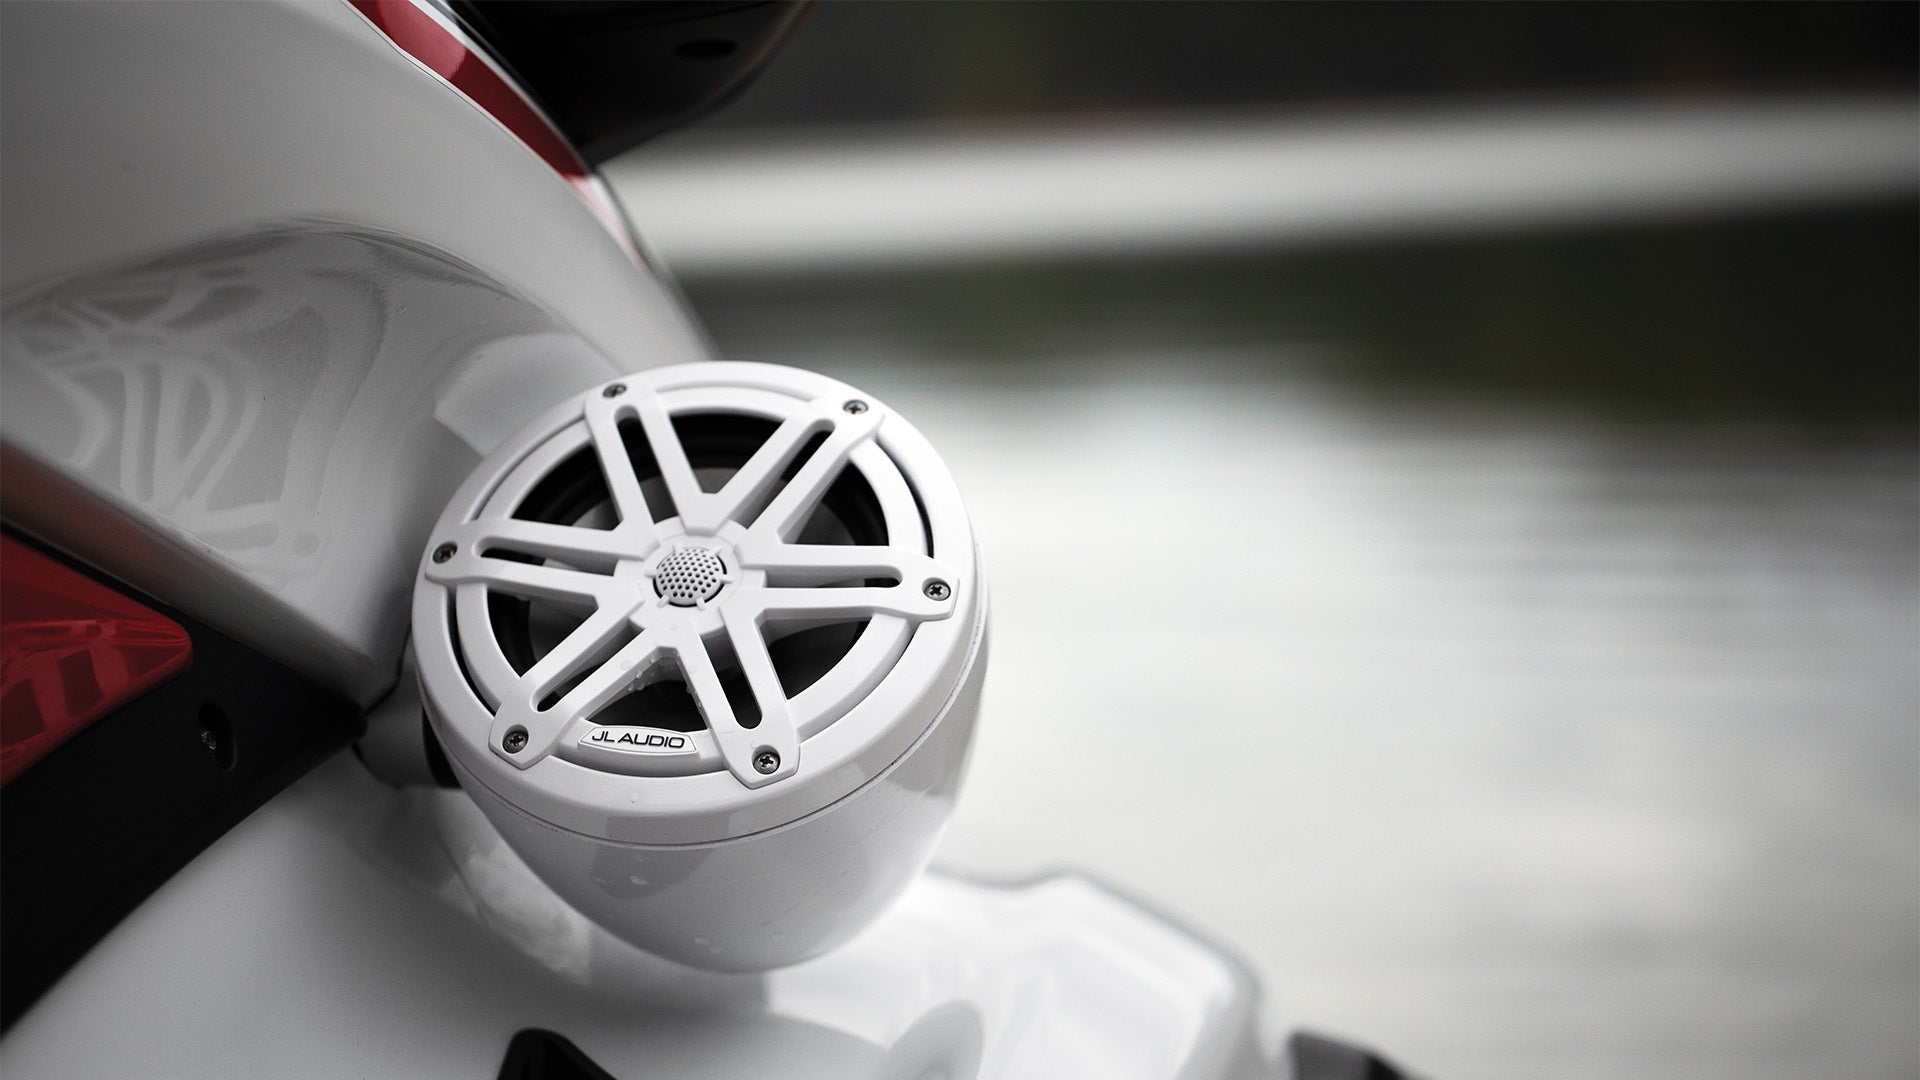 A closeup view of a white VeX Speaker unit installed on a jet ski.